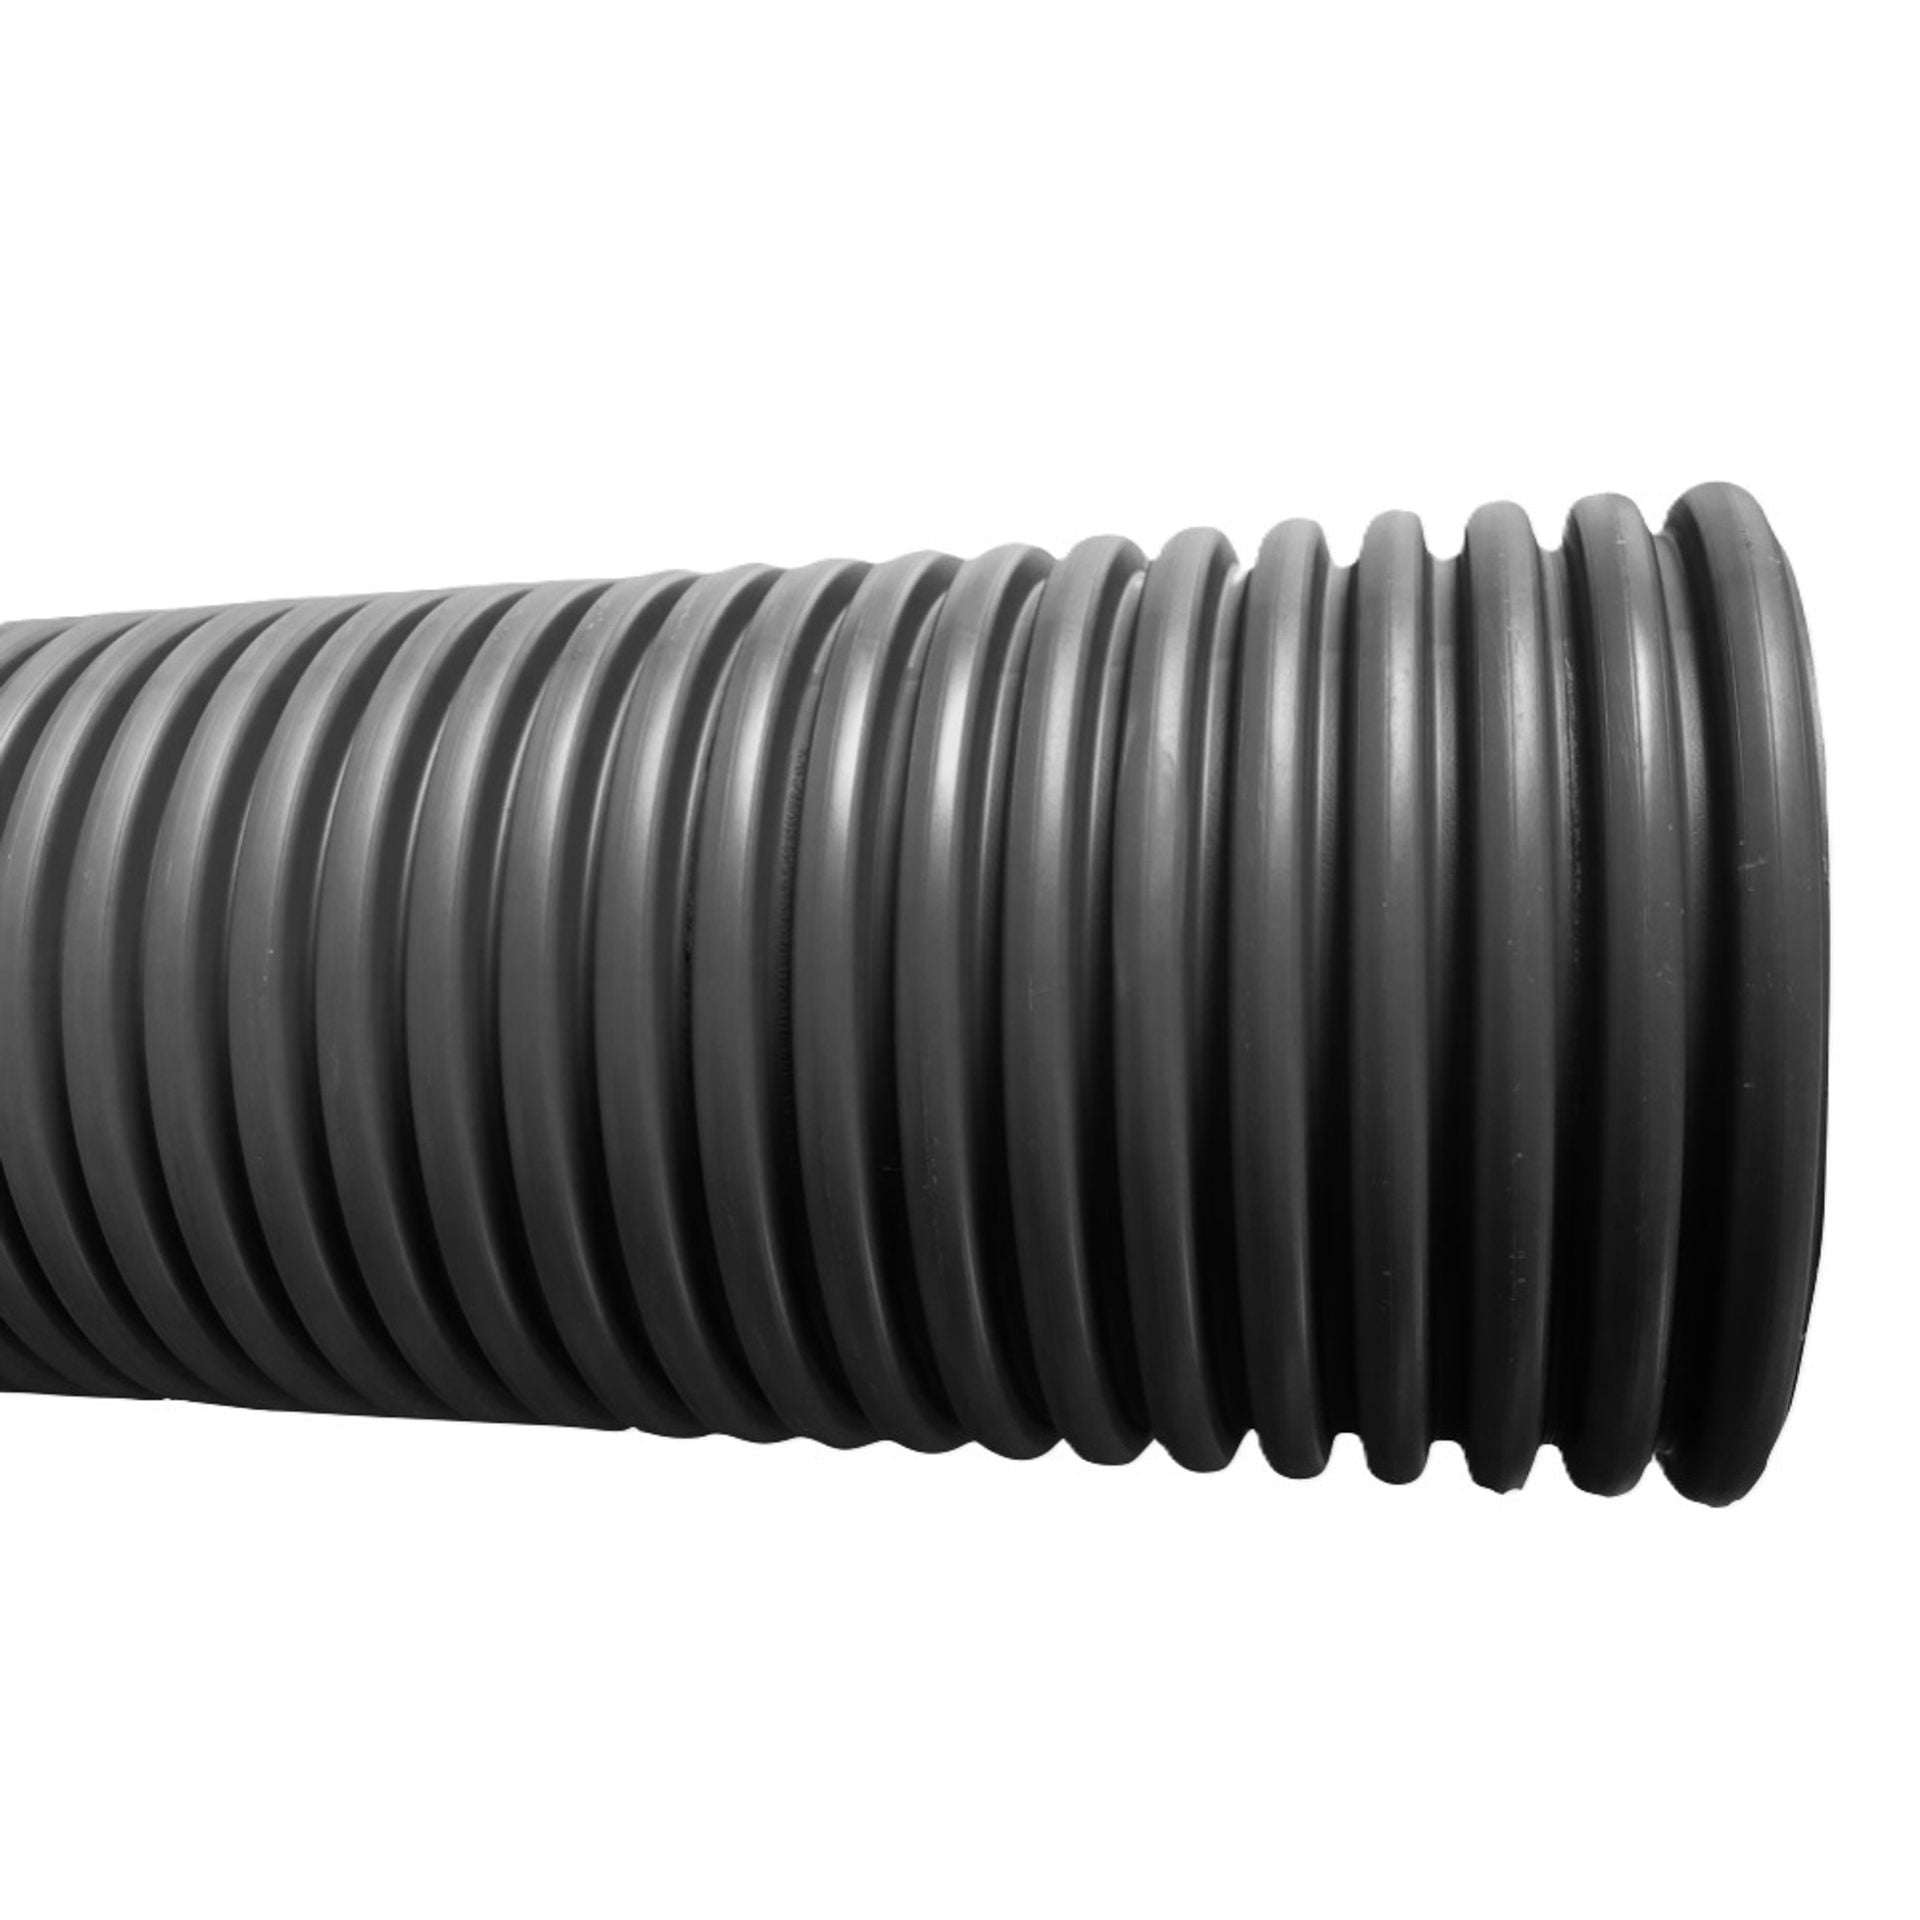 Riser pipe Kaczmarek Single-wall PP corrugated without socket black OD355 / ID315